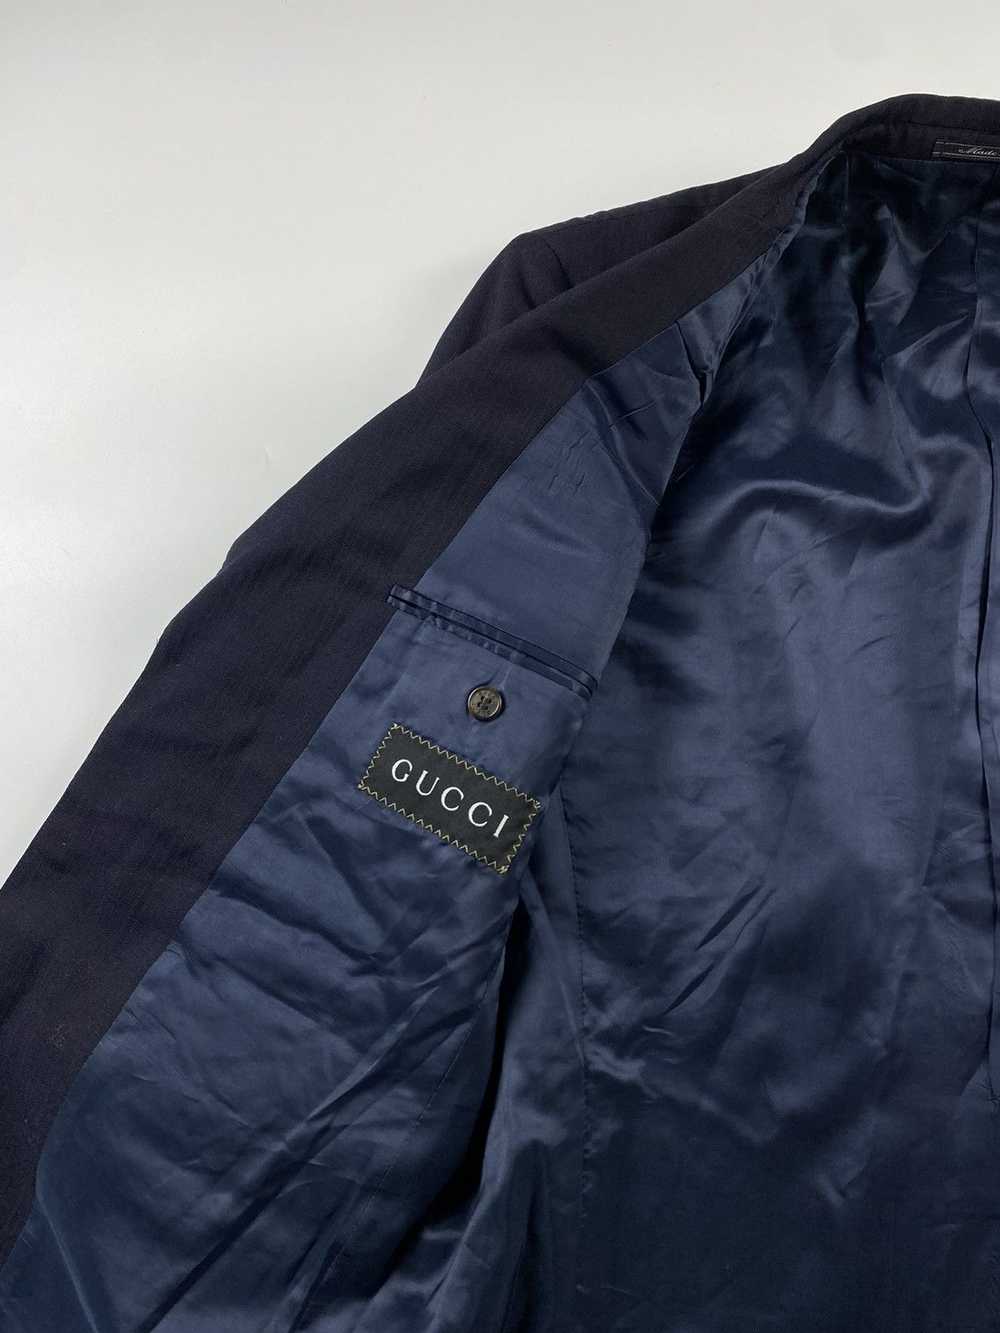 Gucci Gucci x Tom Ford Wool & Mohair Blazer Jacket - image 9